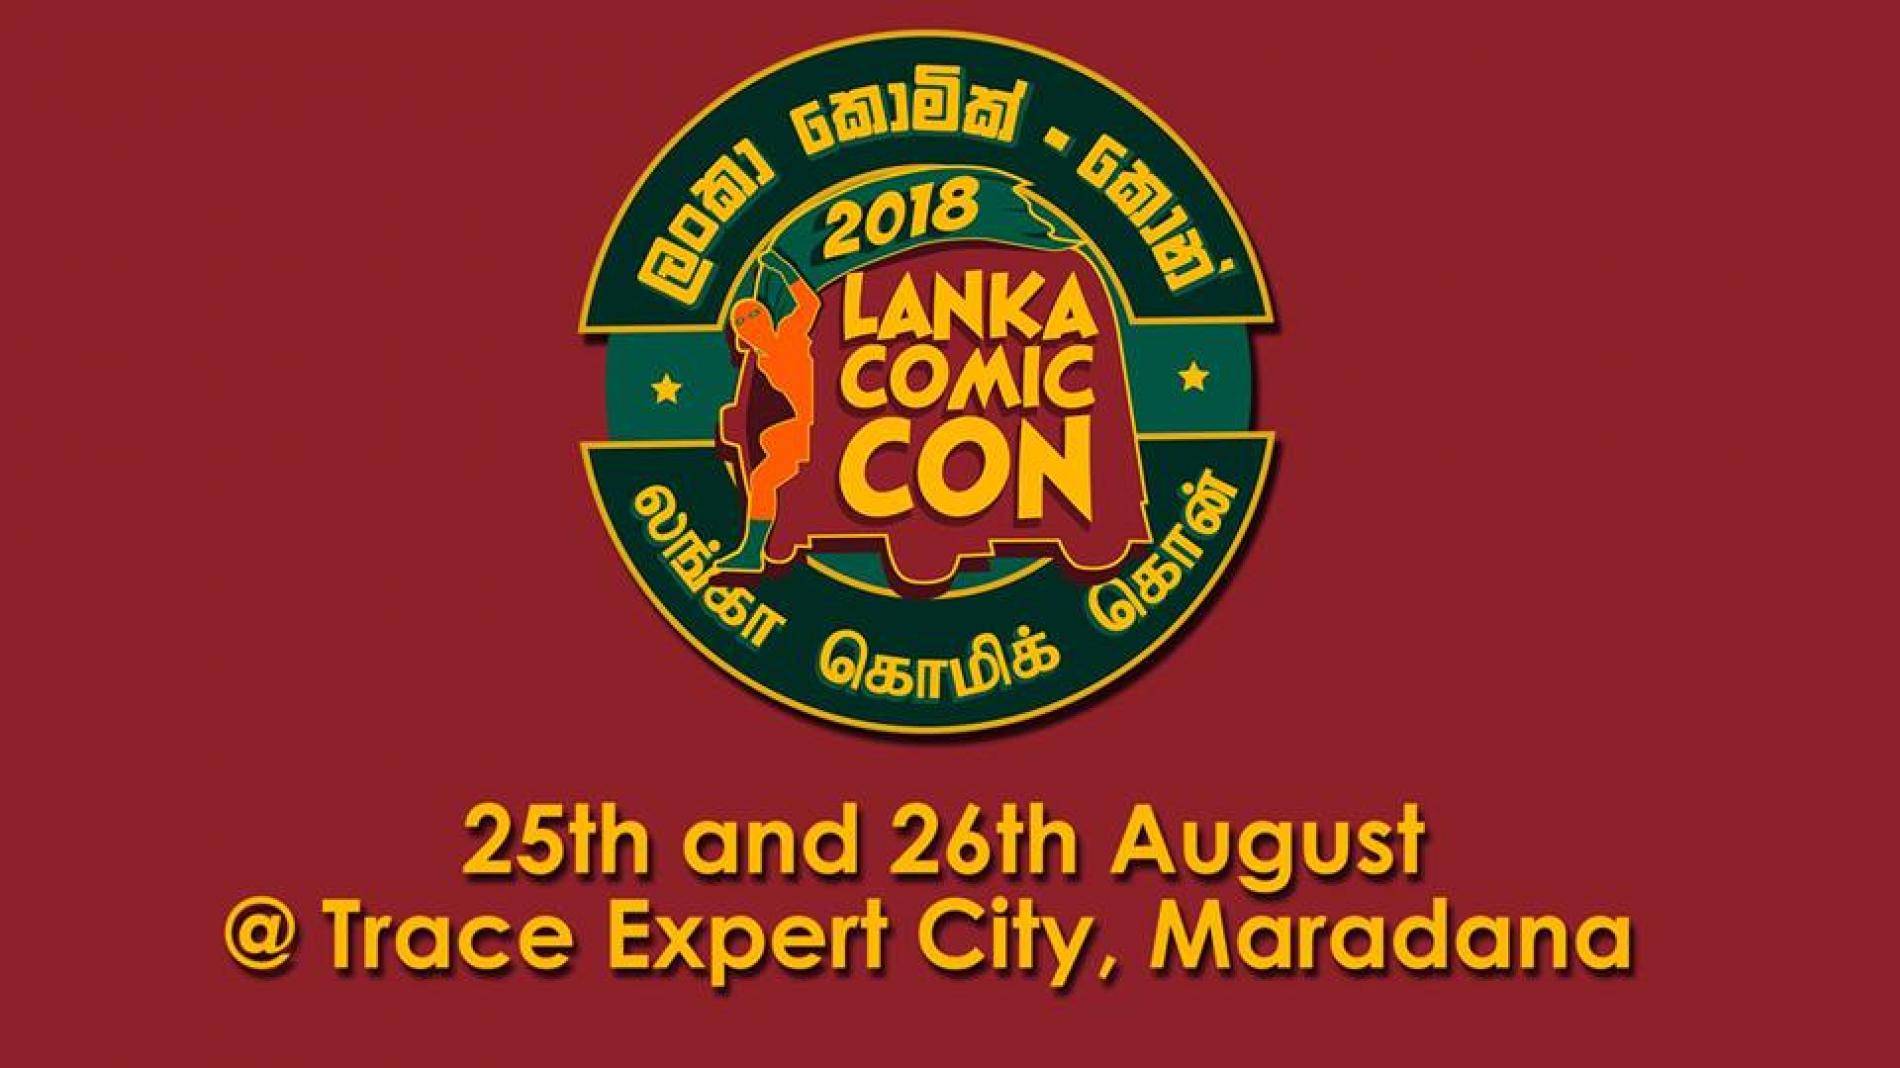 Lanka Comic Con 2018